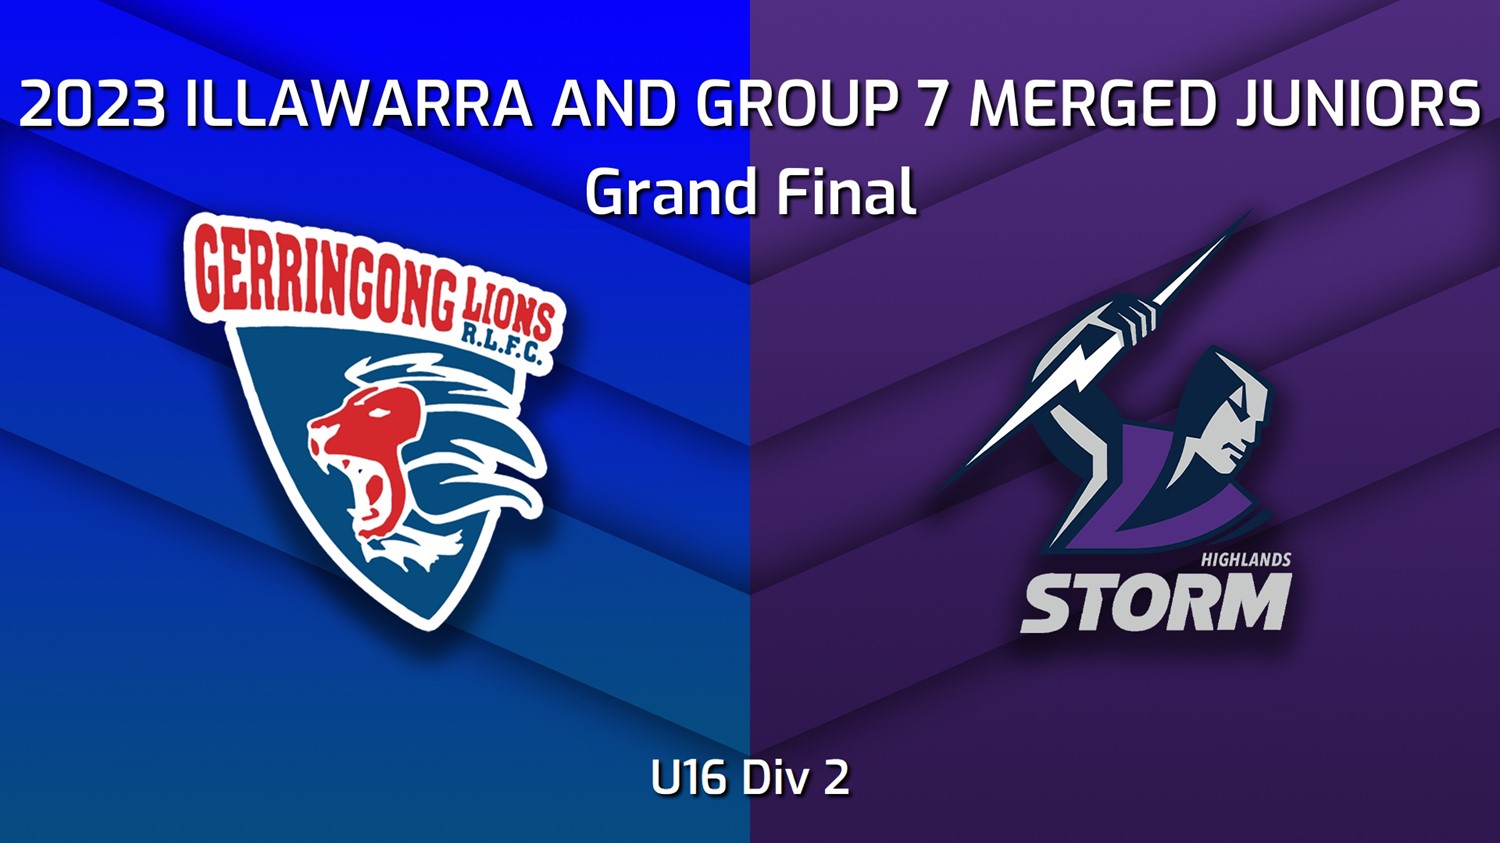 230909-Illawarra and Group 7 Merged Juniors Grand Final - U16 Div 2 - Gerringong Lions v Southern Highlands Storm Slate Image